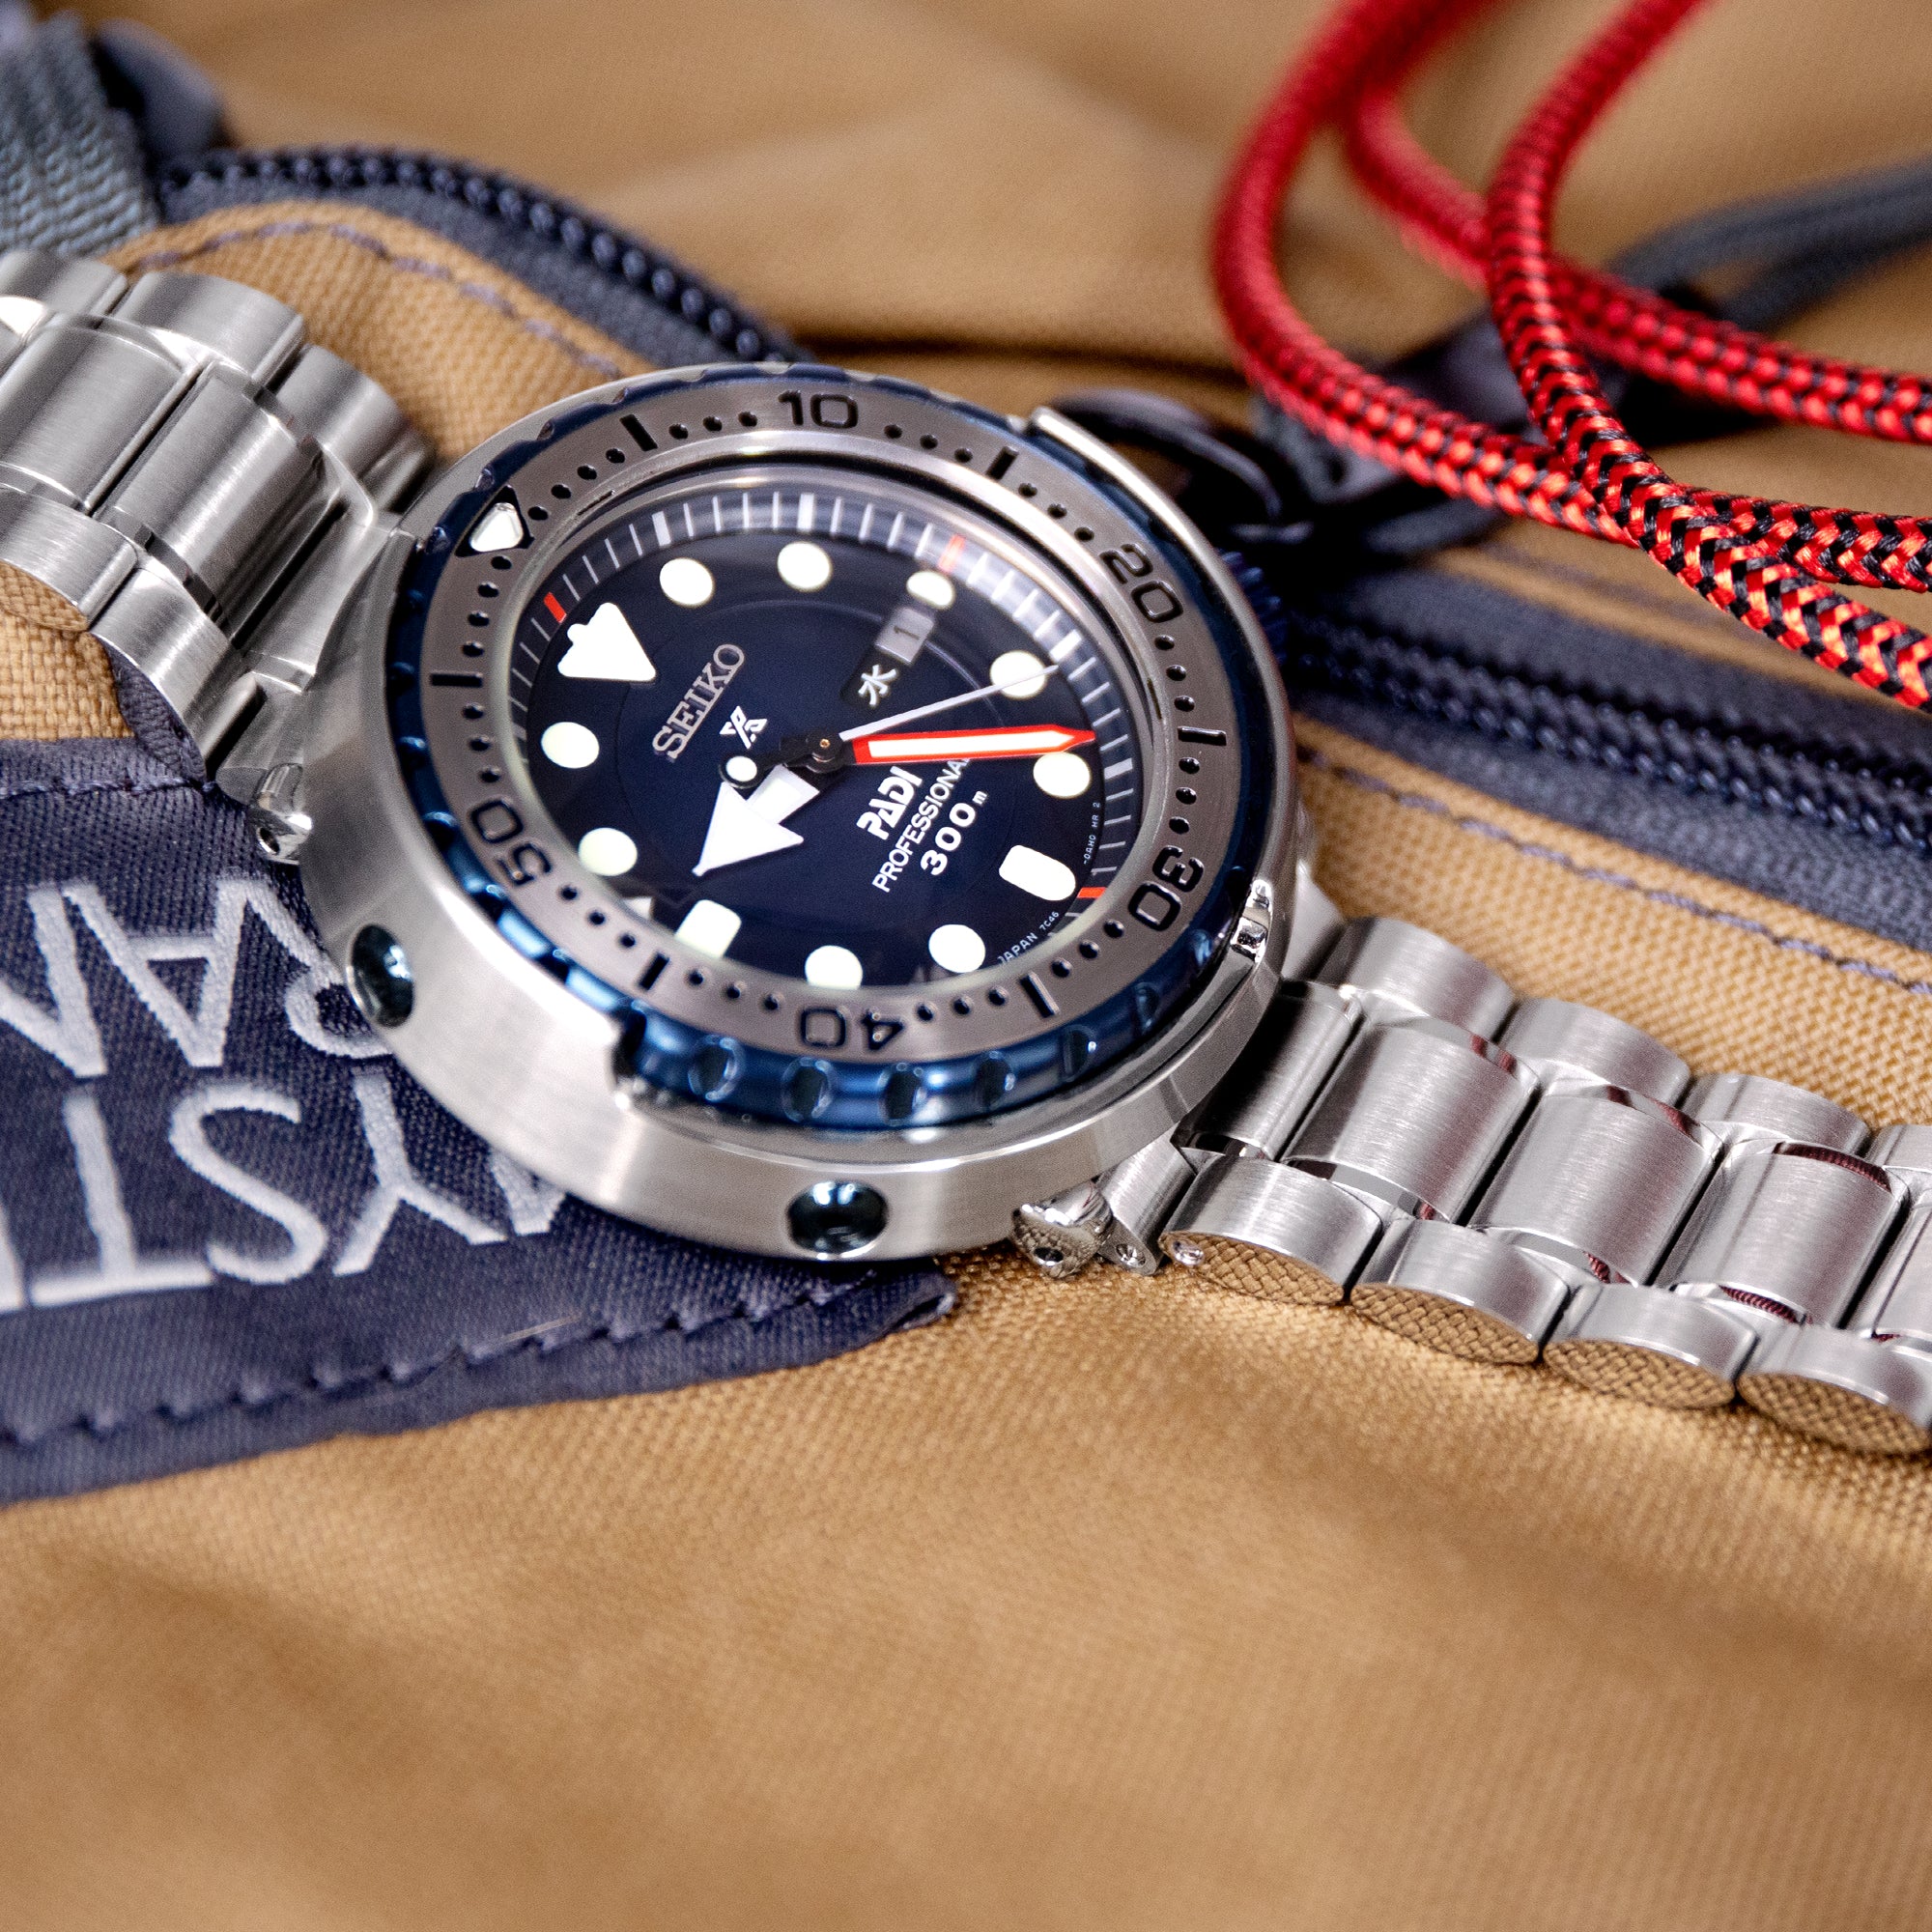 Seiko PADI Marinemaster Tuna Professional 300M Tool-less watch band resizing magic by Strapcode